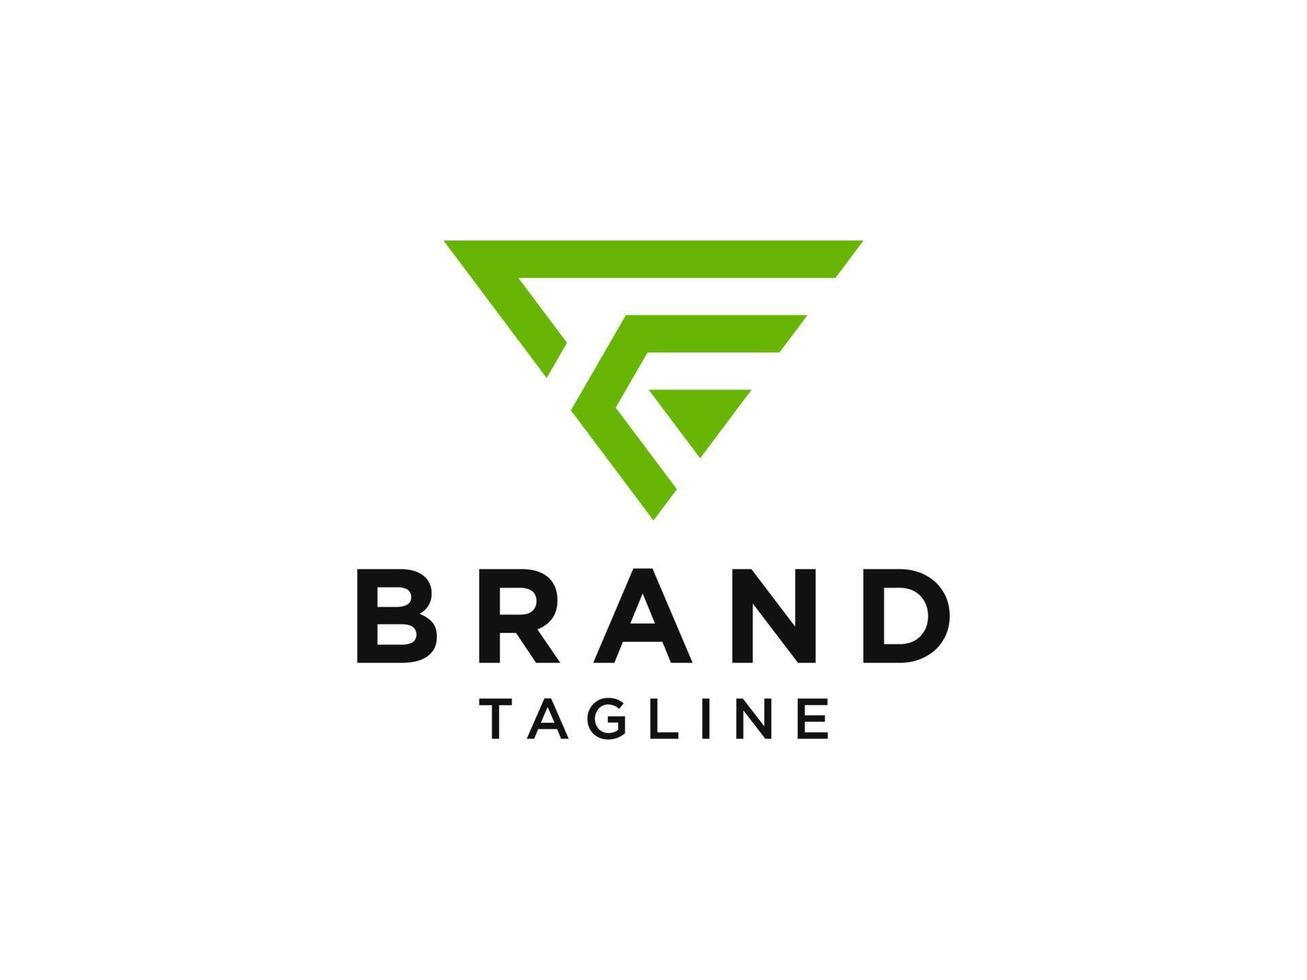 letra inicial f logotipo. estilo de origami de forma geométrica verde isolado no fundo branco. utilizável para logotipos de negócios e branding. elemento de modelo de design de logotipo de vetor plana.